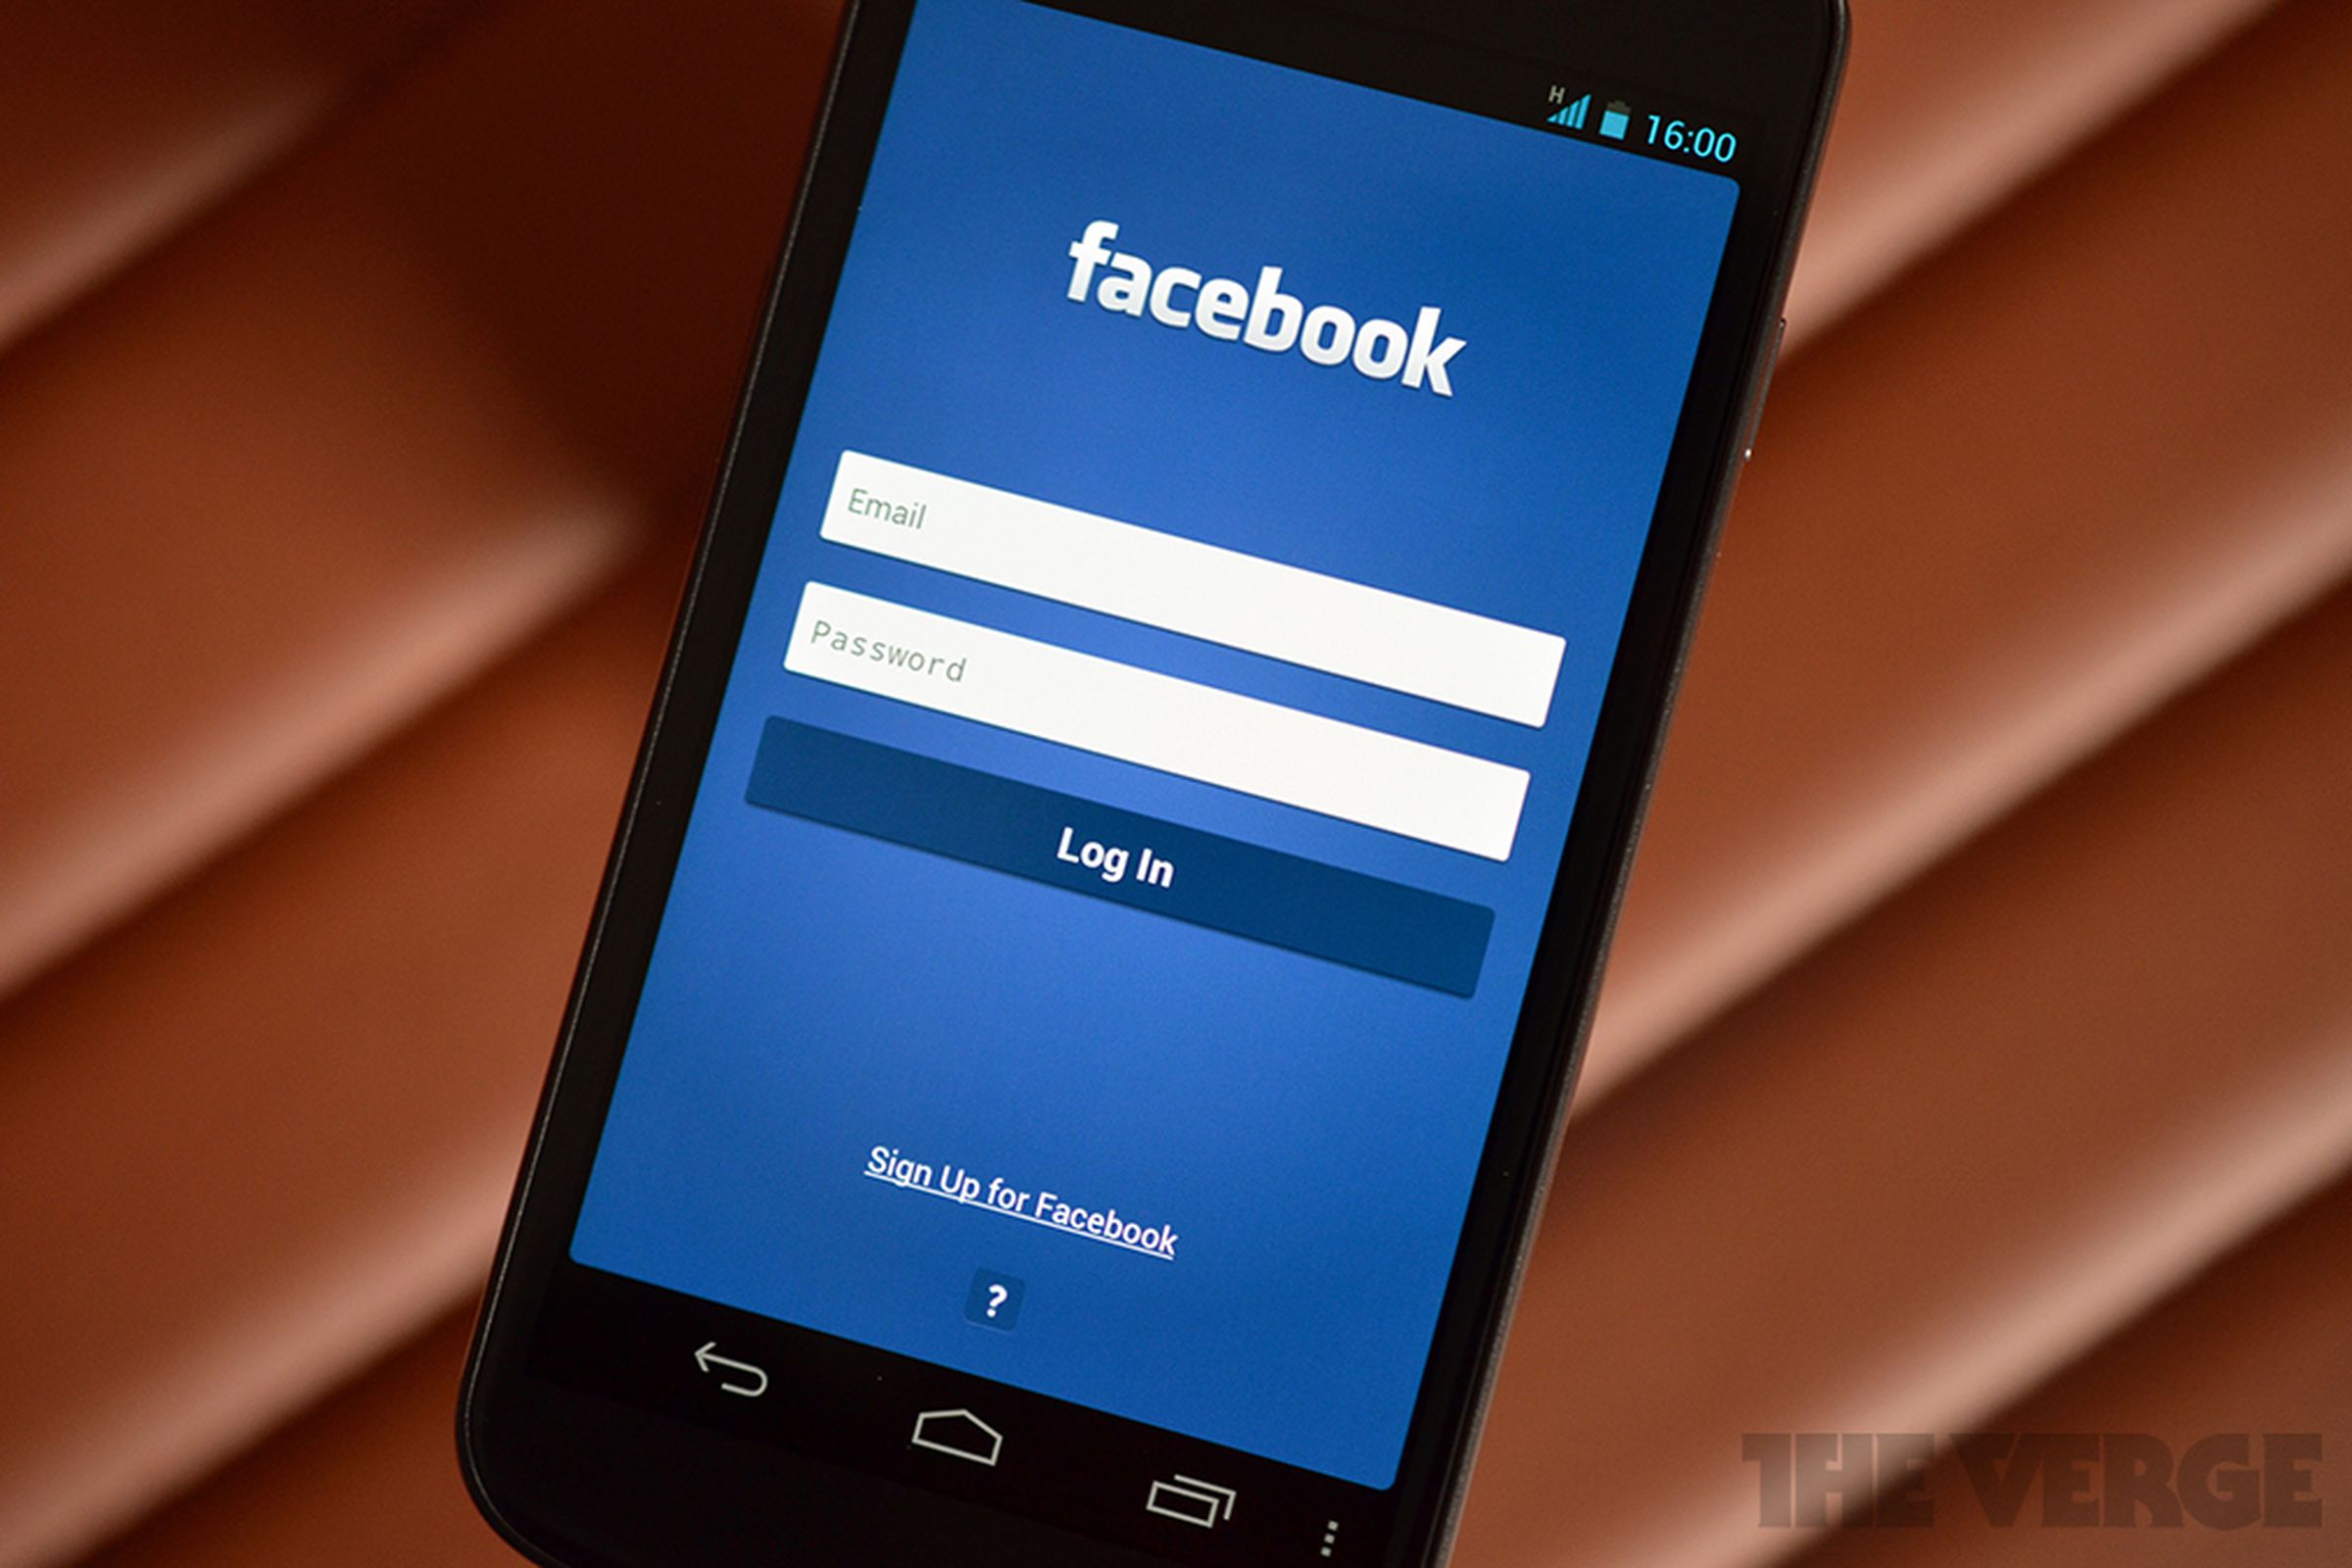 Facebook Android login screen (stock)